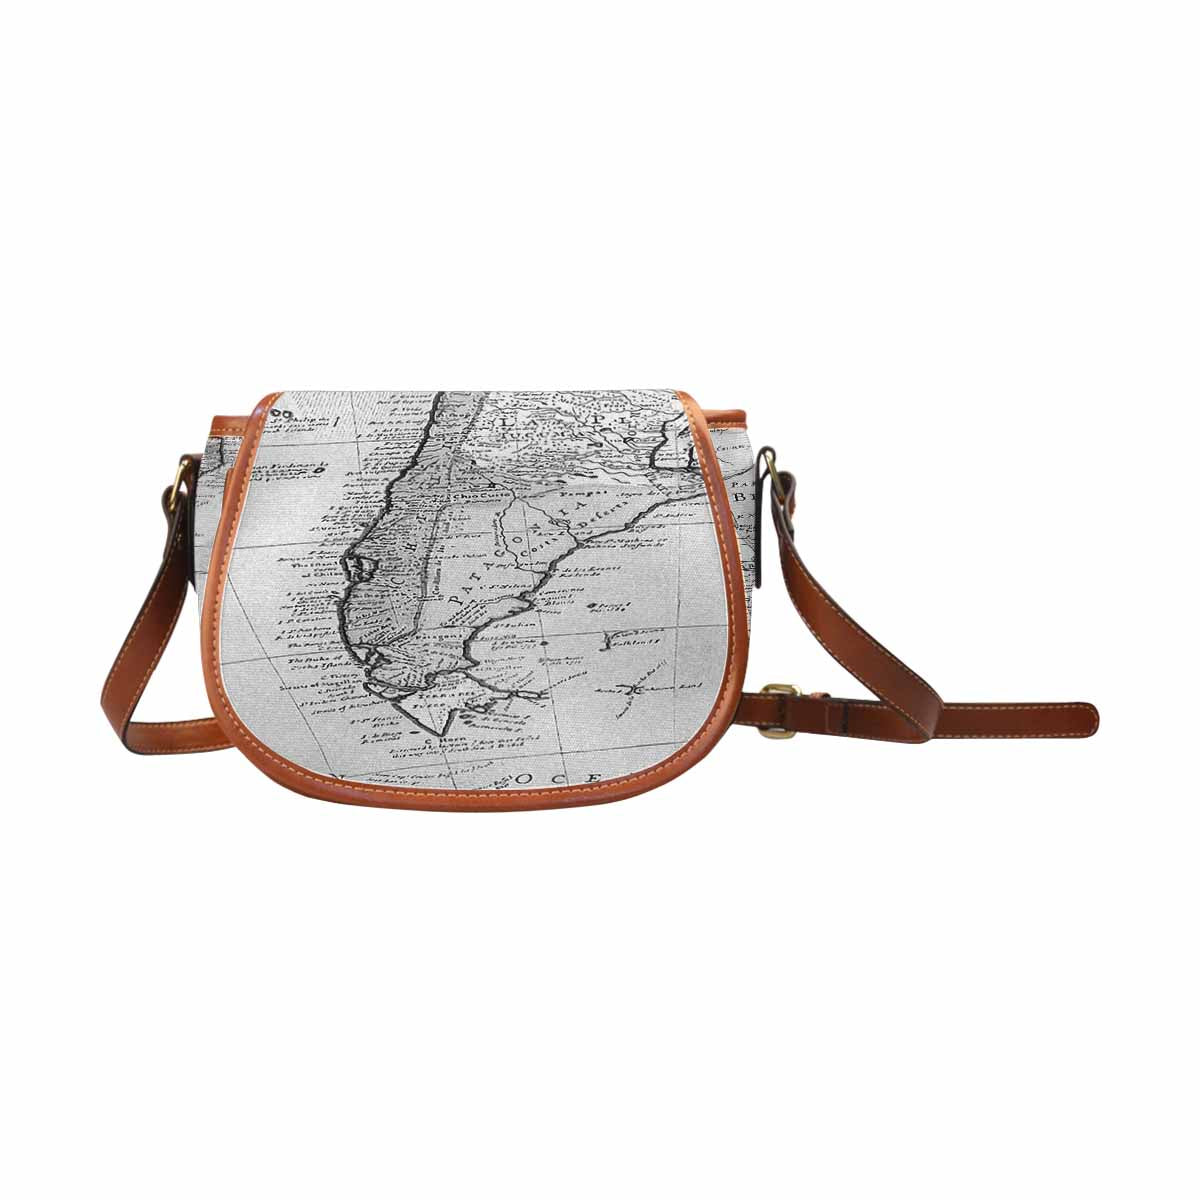 Antique Map design Handbag, saddle bag, Design 38